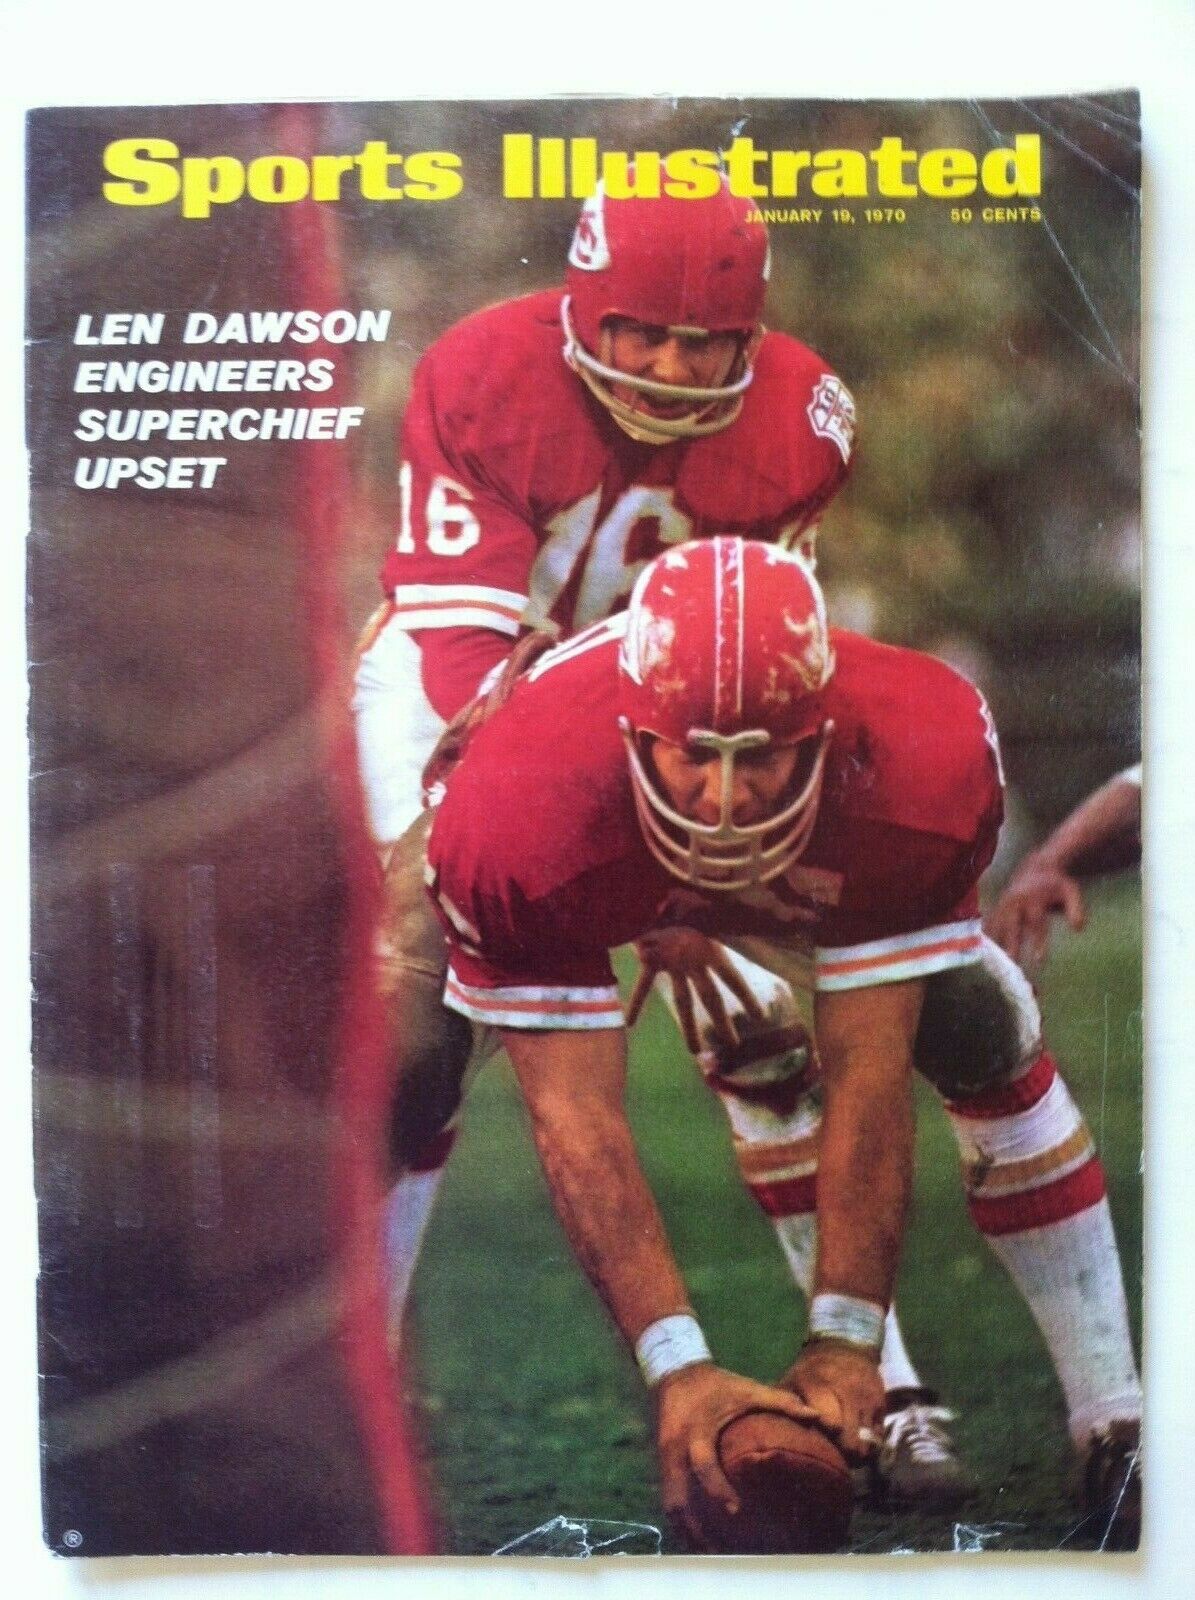 Sports Illustrated (1970/01/19) - LEN DAWSON '...Superchiefs Upset' Baseball cards value